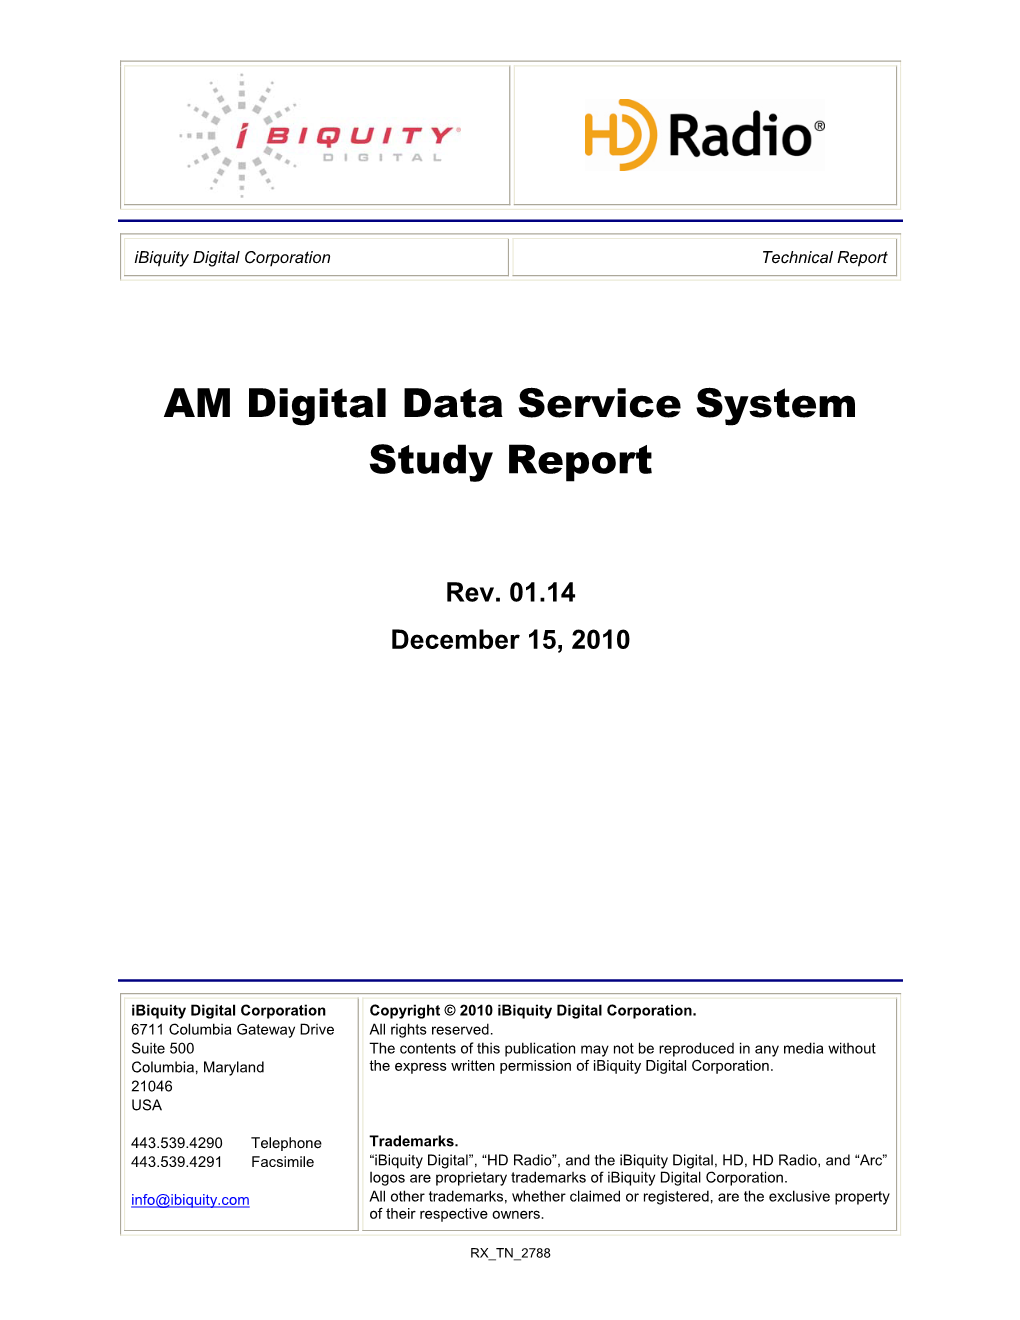 AM Digital Data Service System Study Report